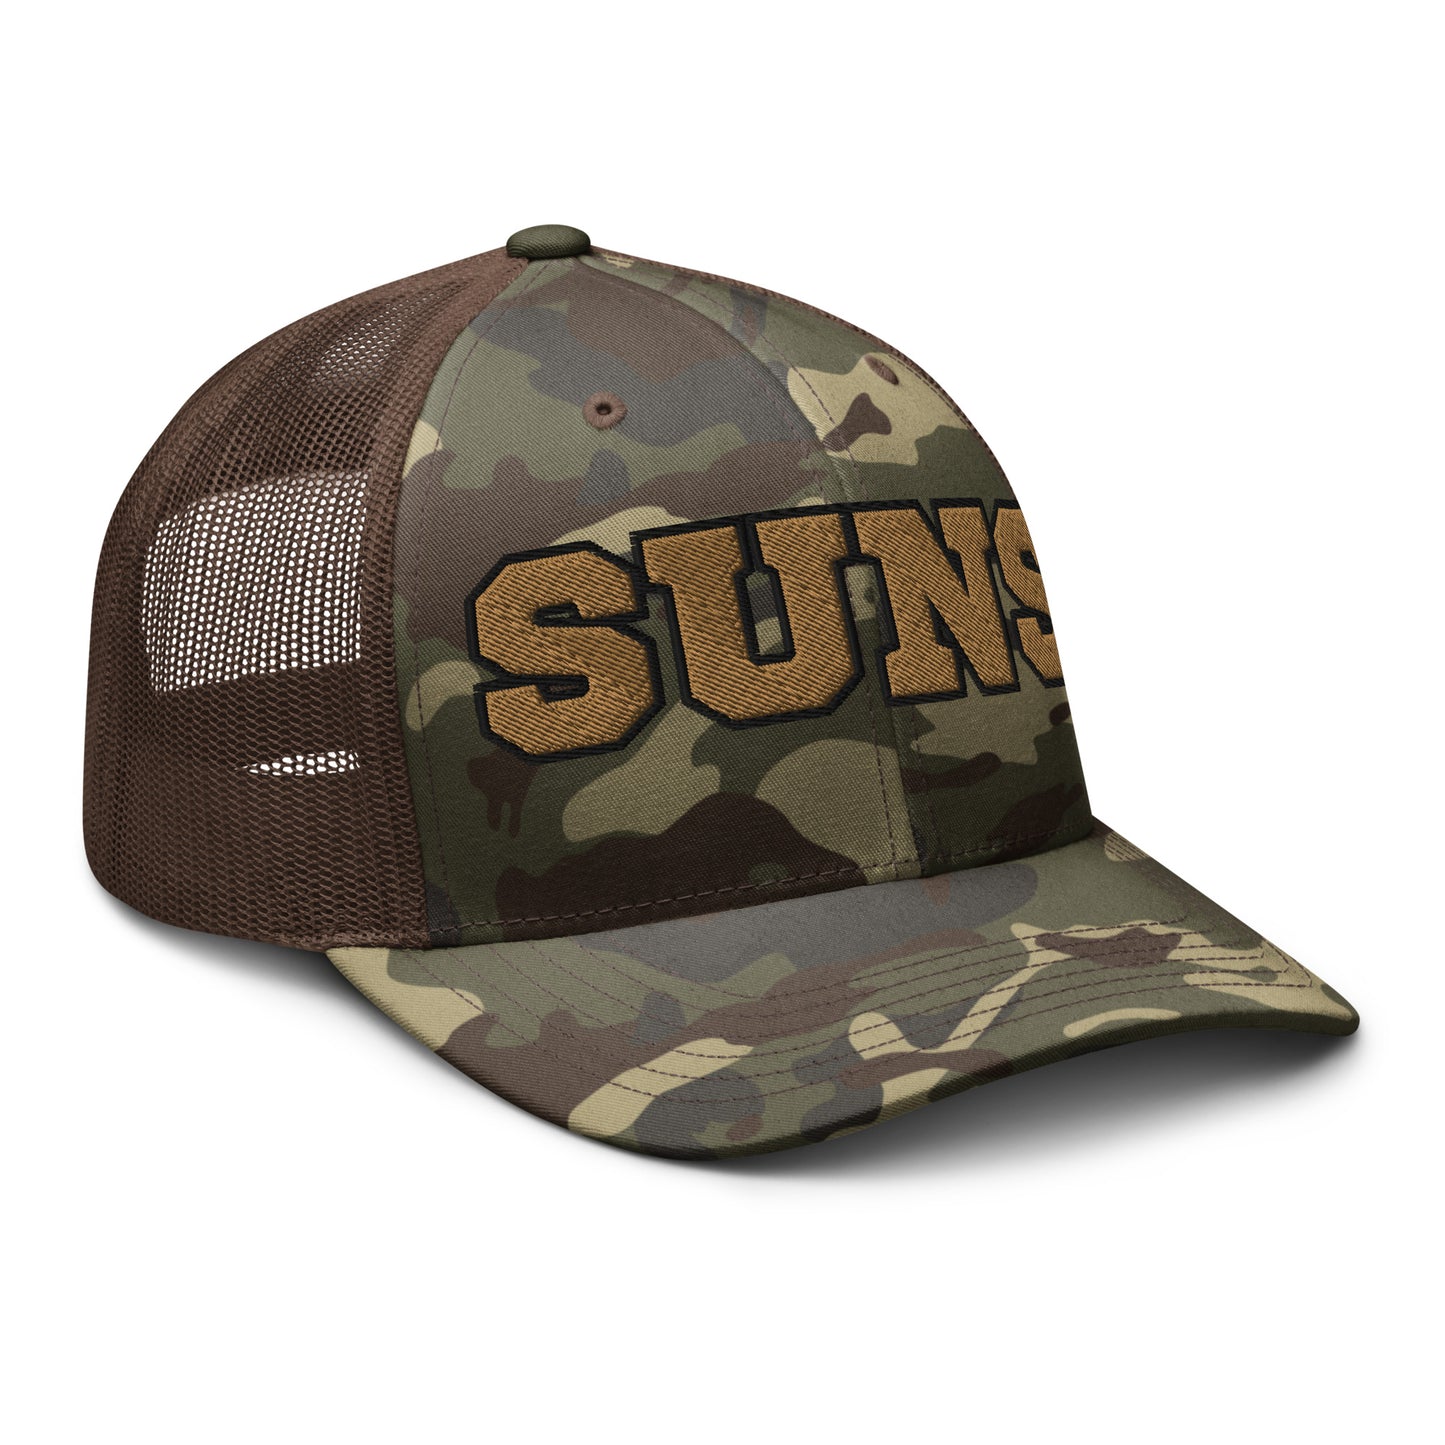 SUNS Camouflage trucker hat